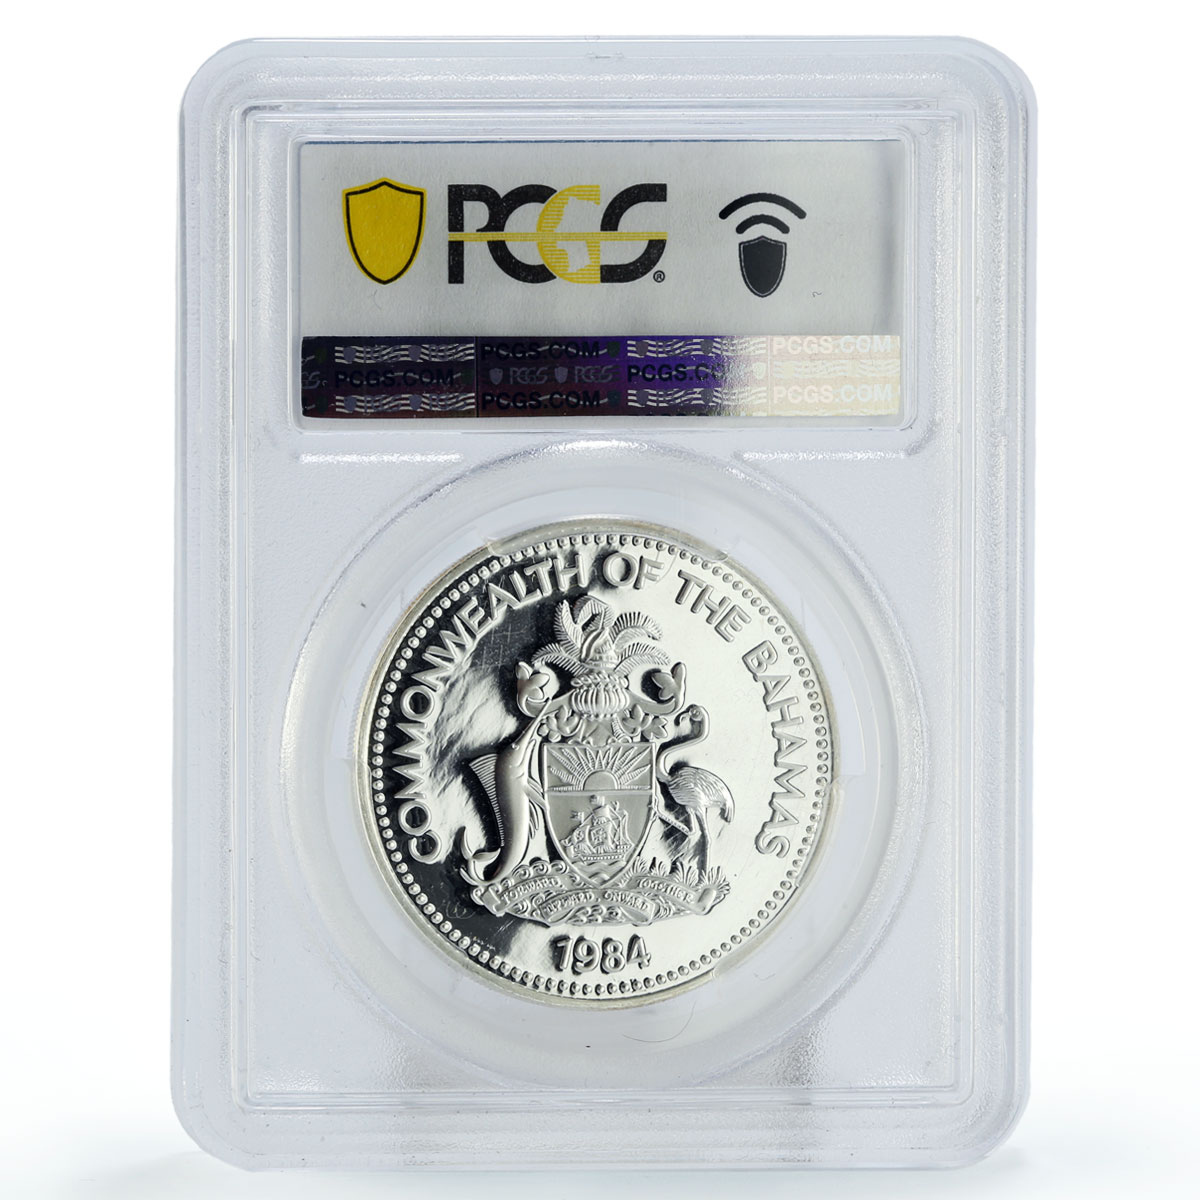 Bahamas 5 dollars Regular Coinage Historical Map KM-106 PR69 PCGS Ag coin 1984